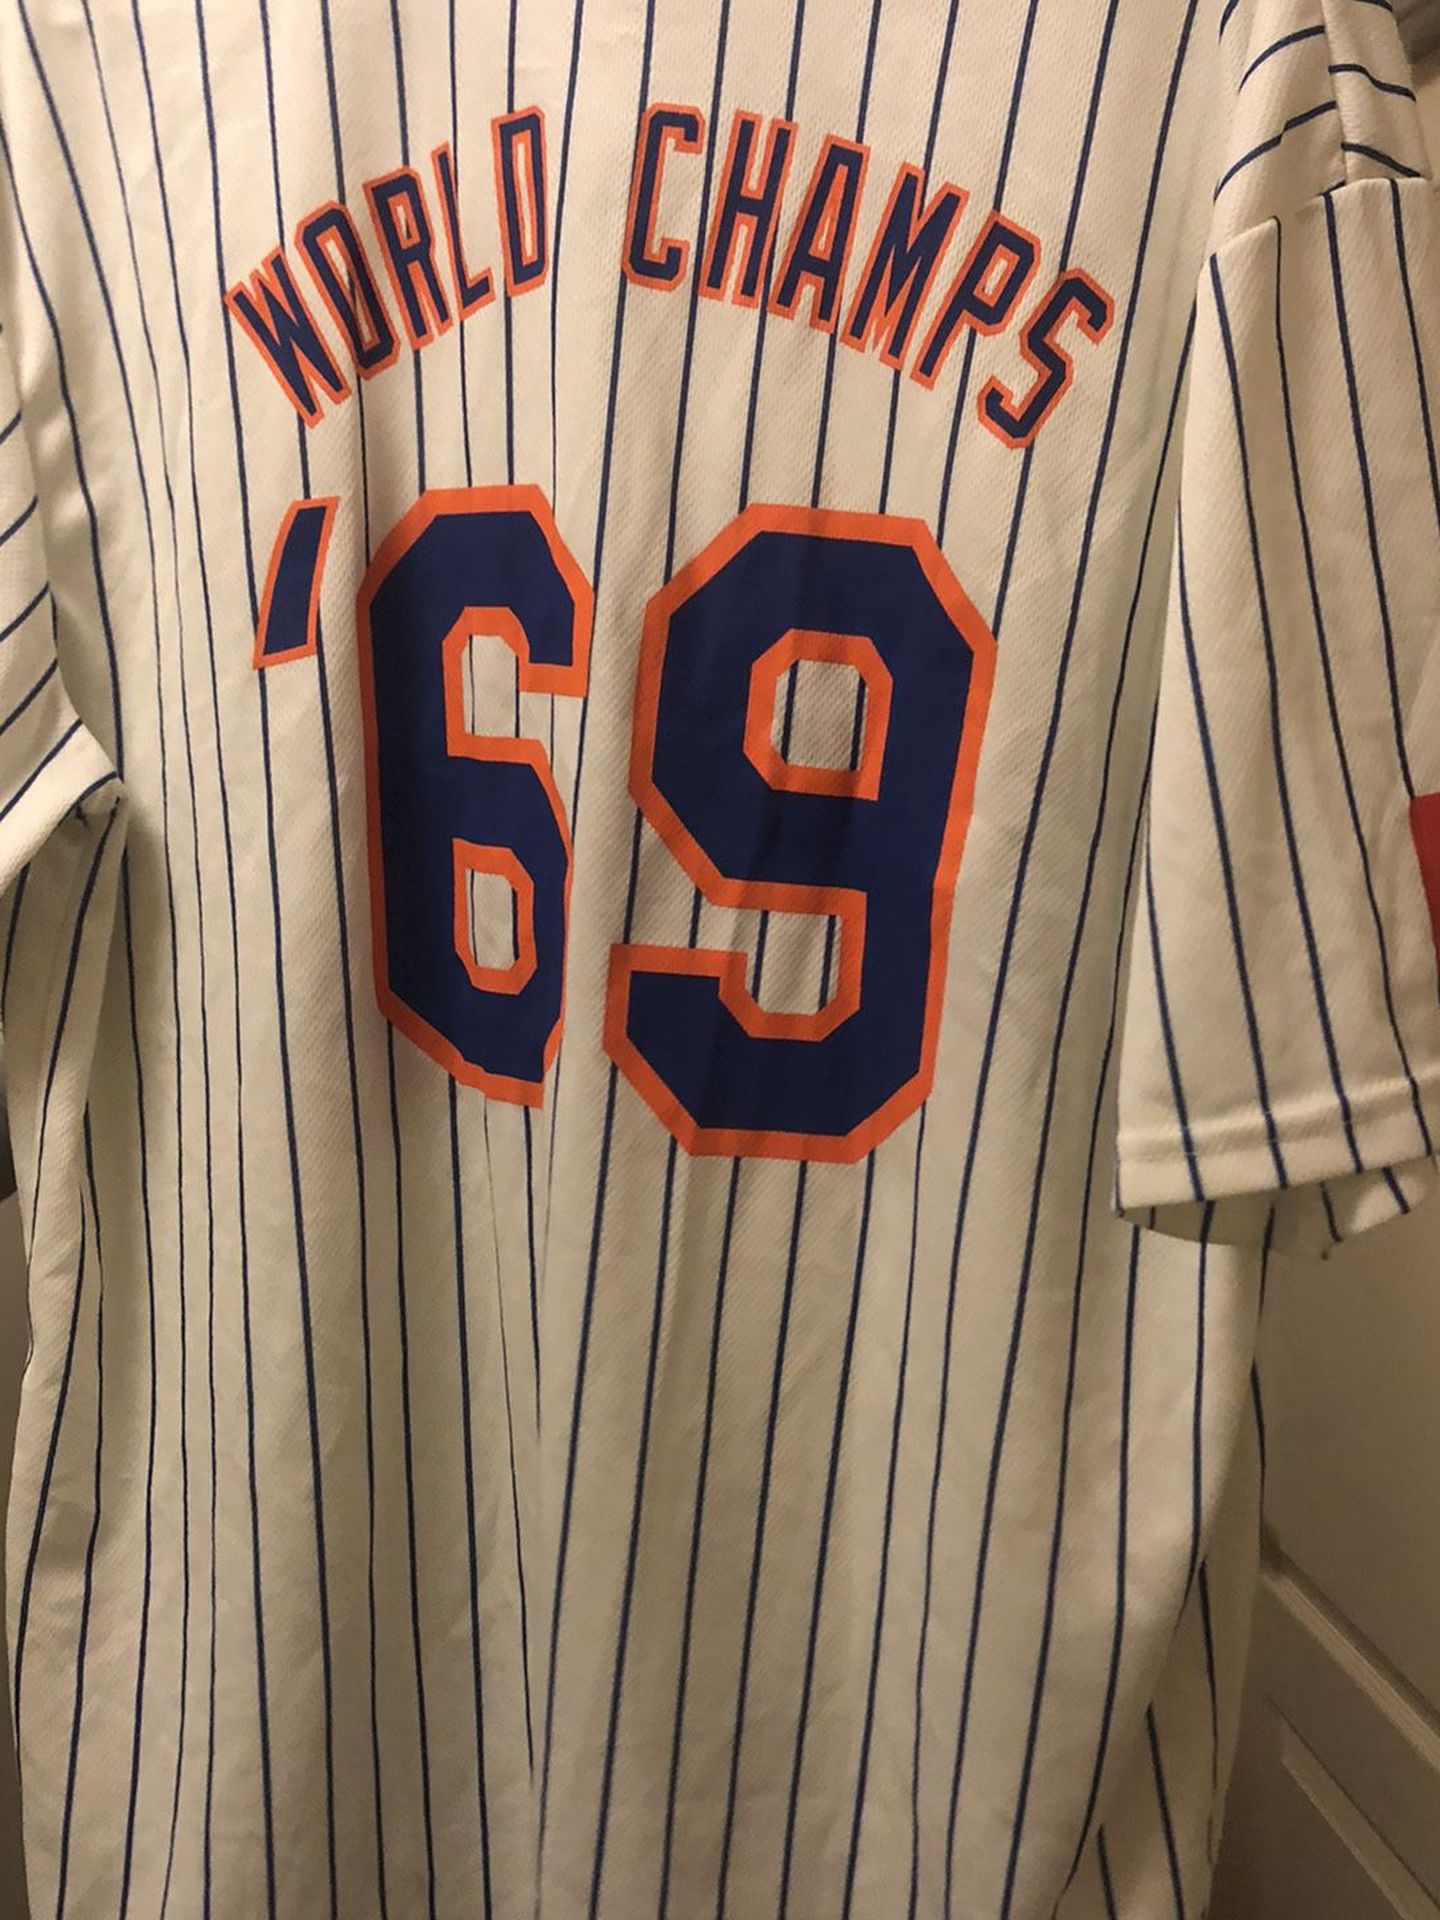 New York Mets 69 World Champs Vintage Promo Baseball Jersey McDonald’s Patch Size xL!